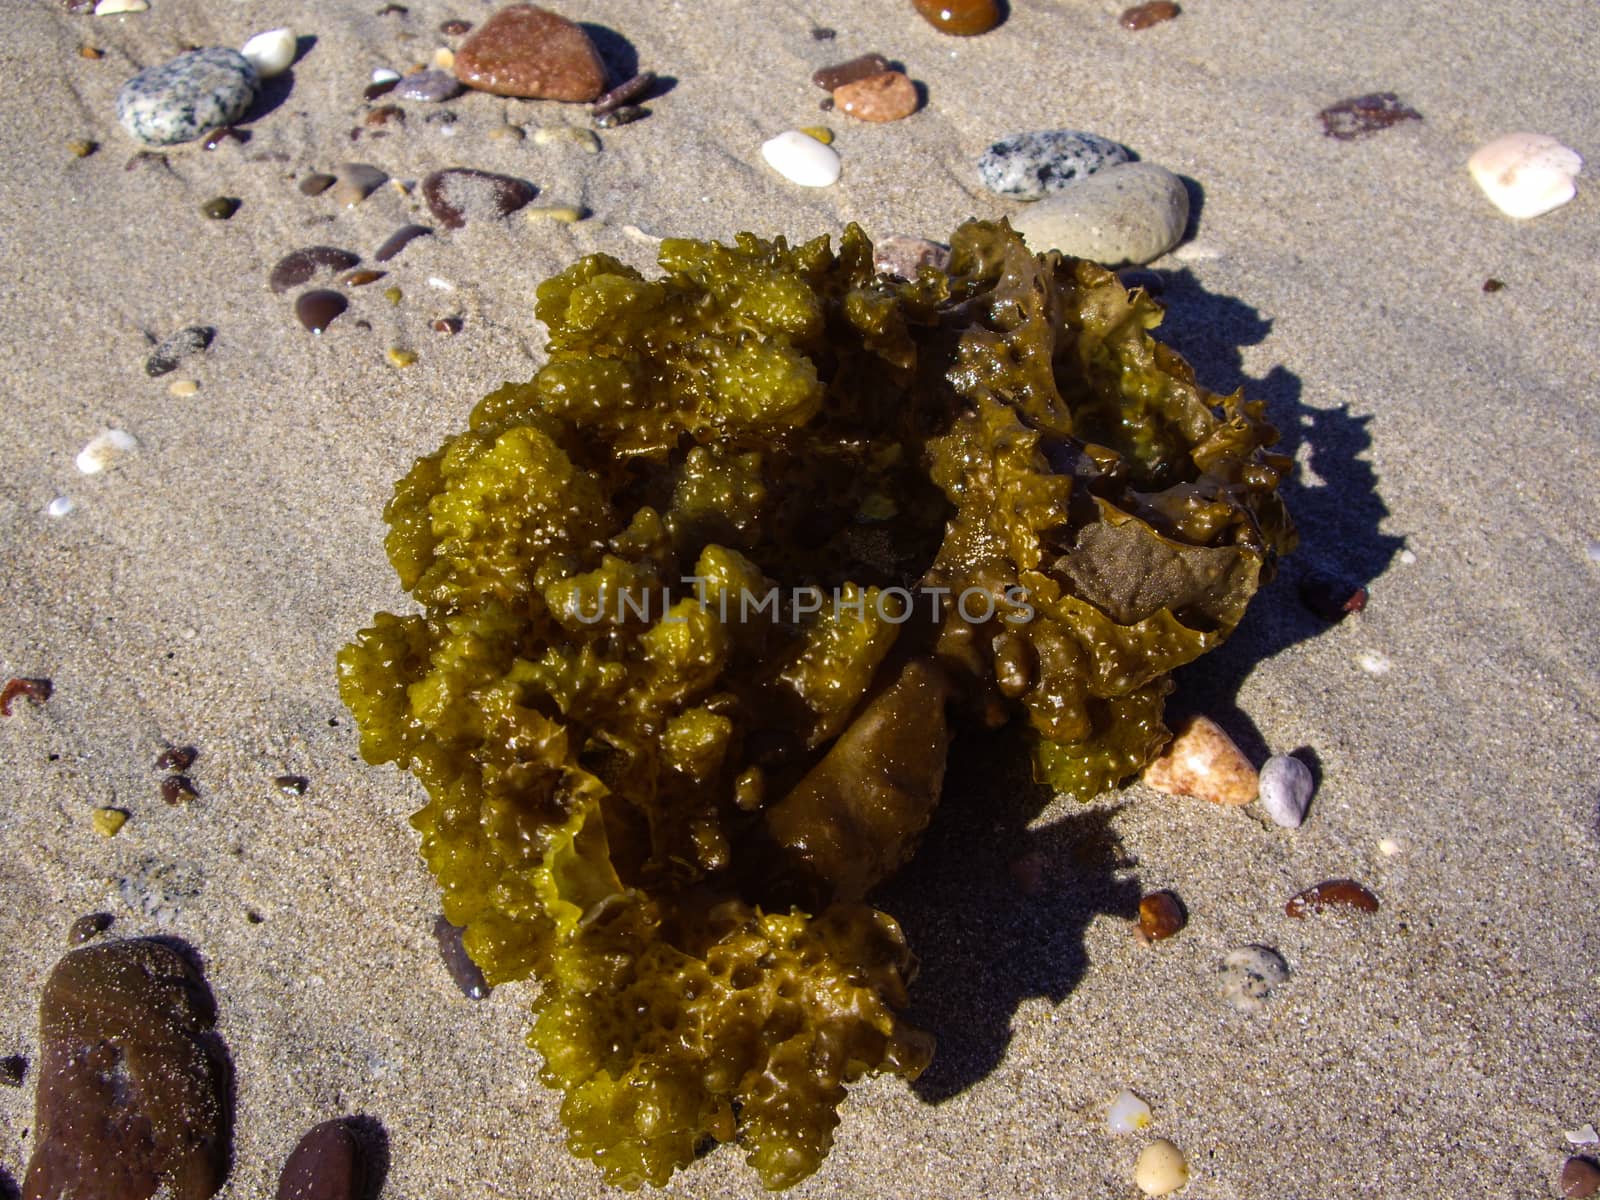 Seaweed by emattil